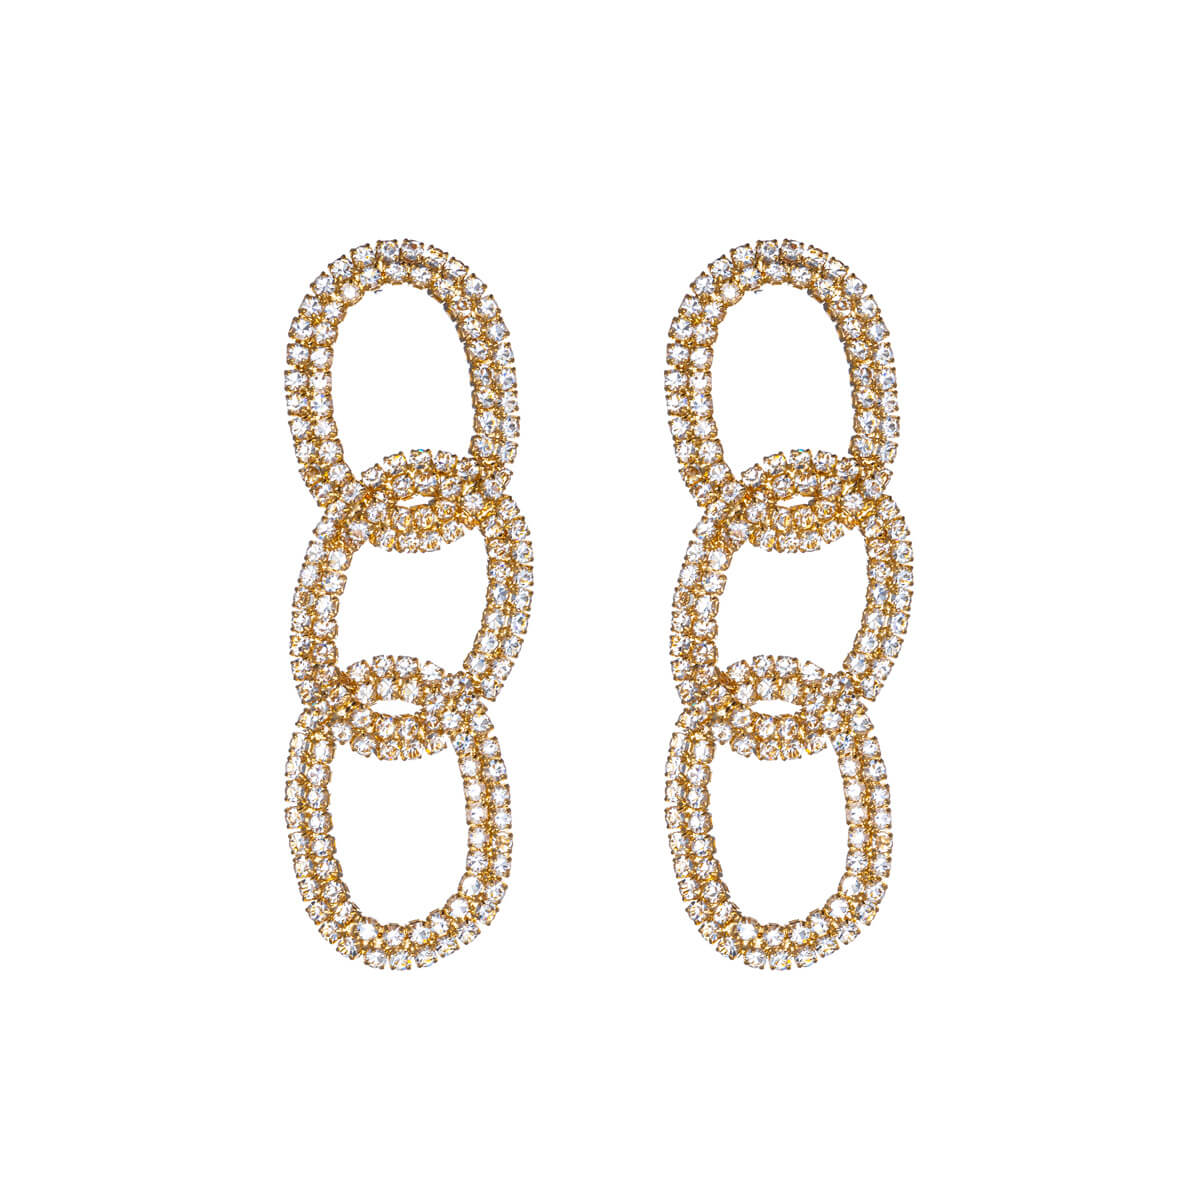 Glass-stone festive earrings with chain links